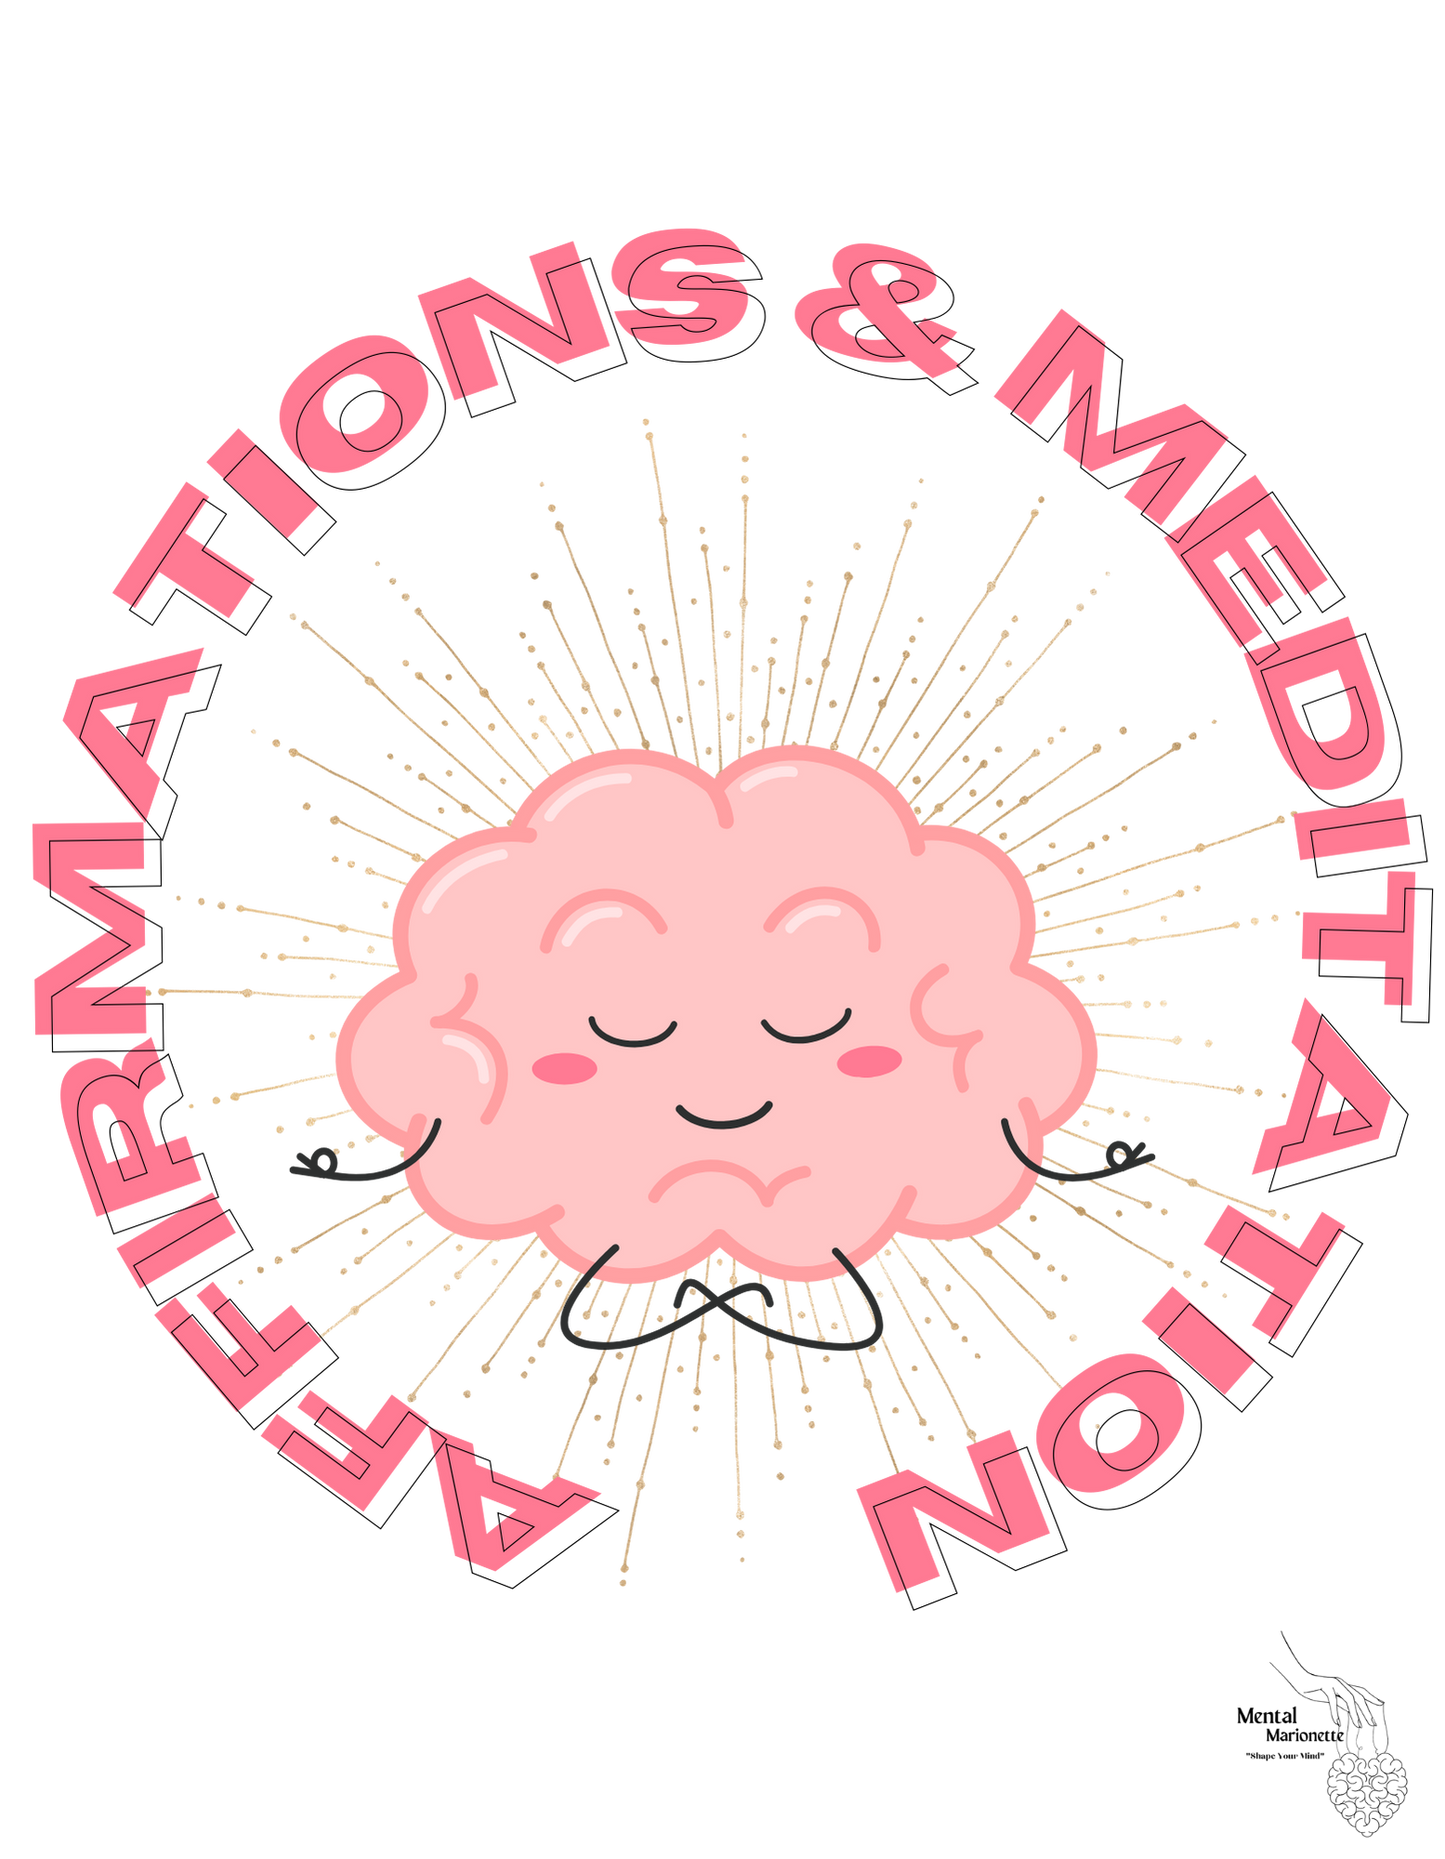 Affirmations and Meditations